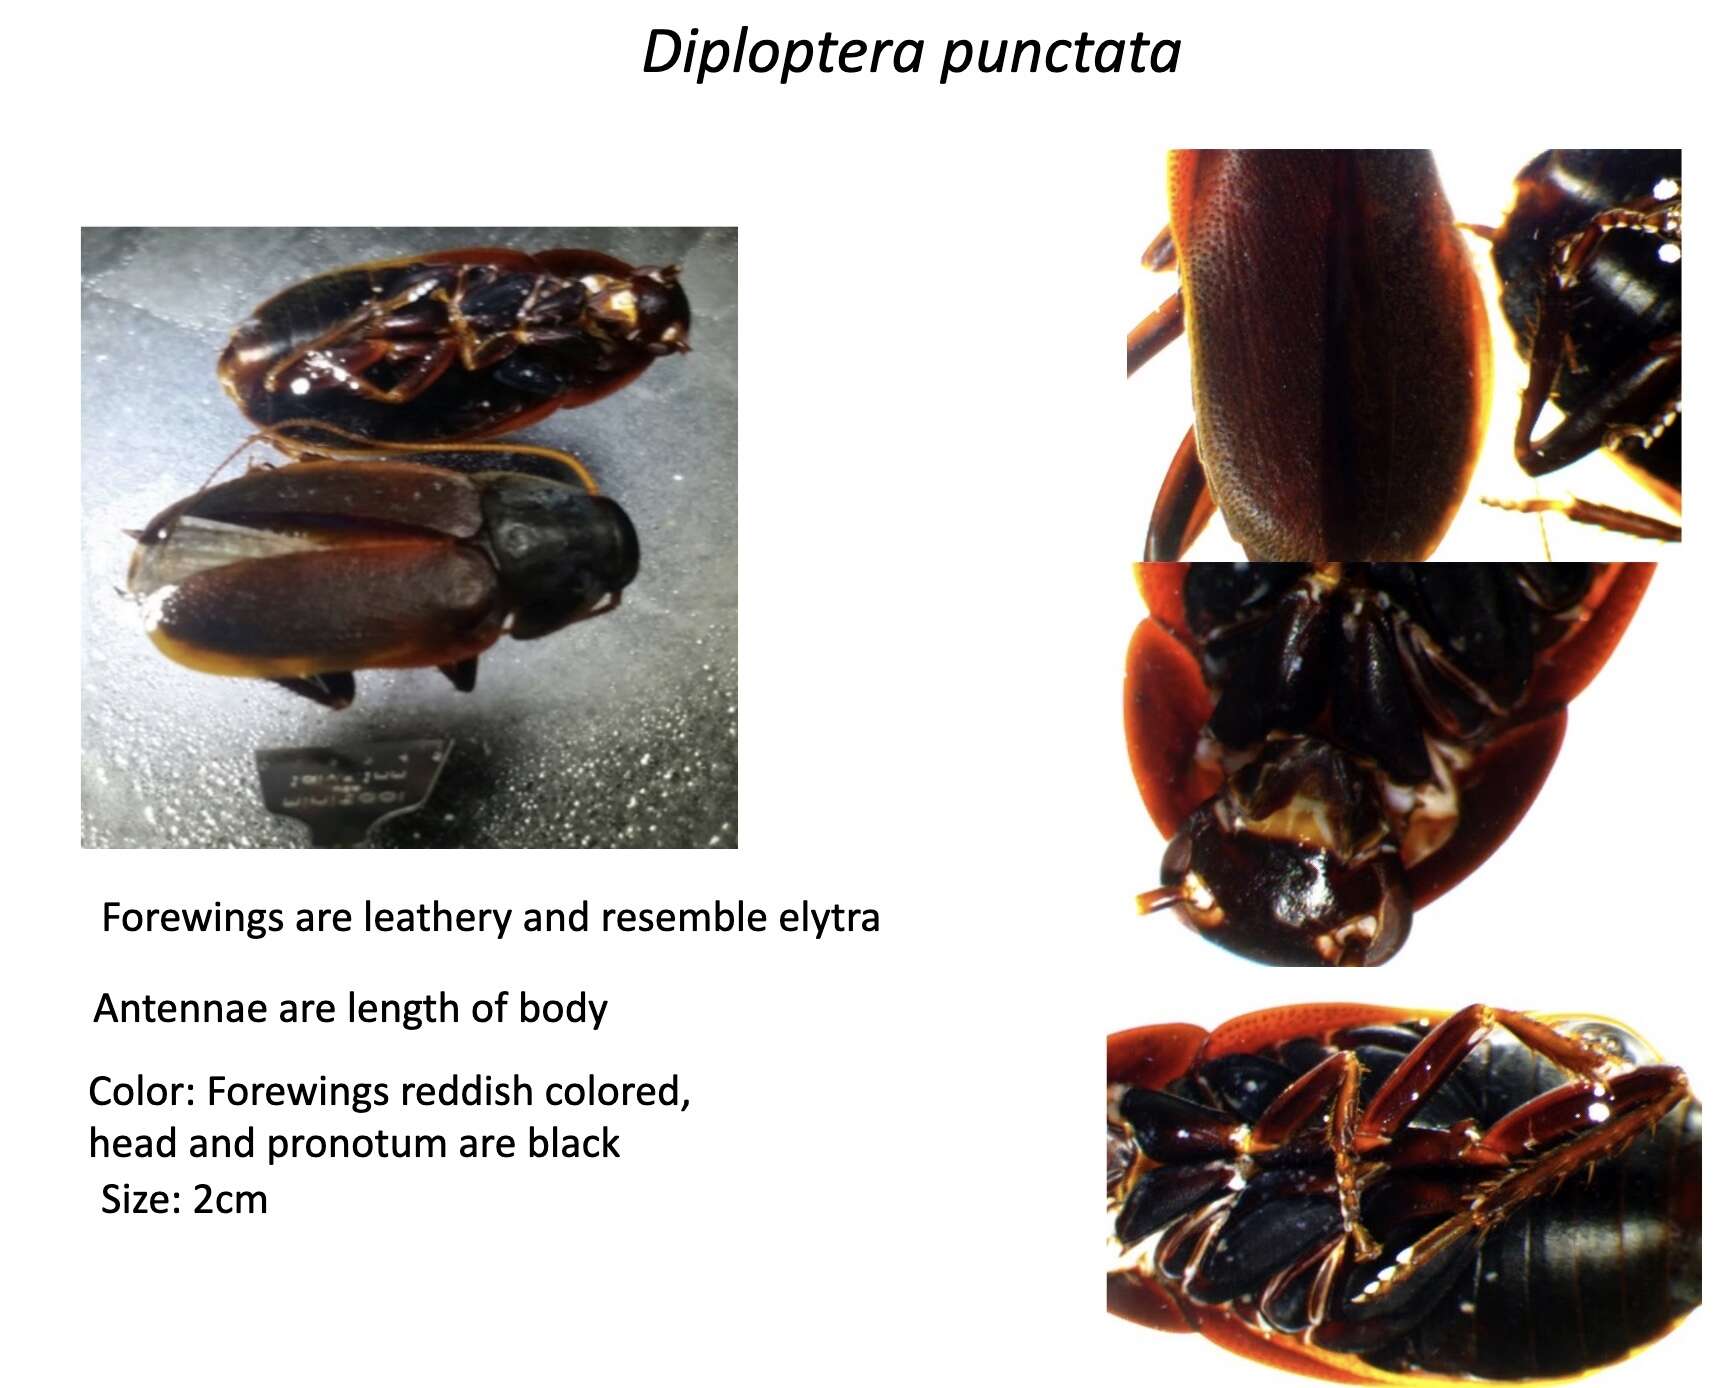 Image of Diploptera